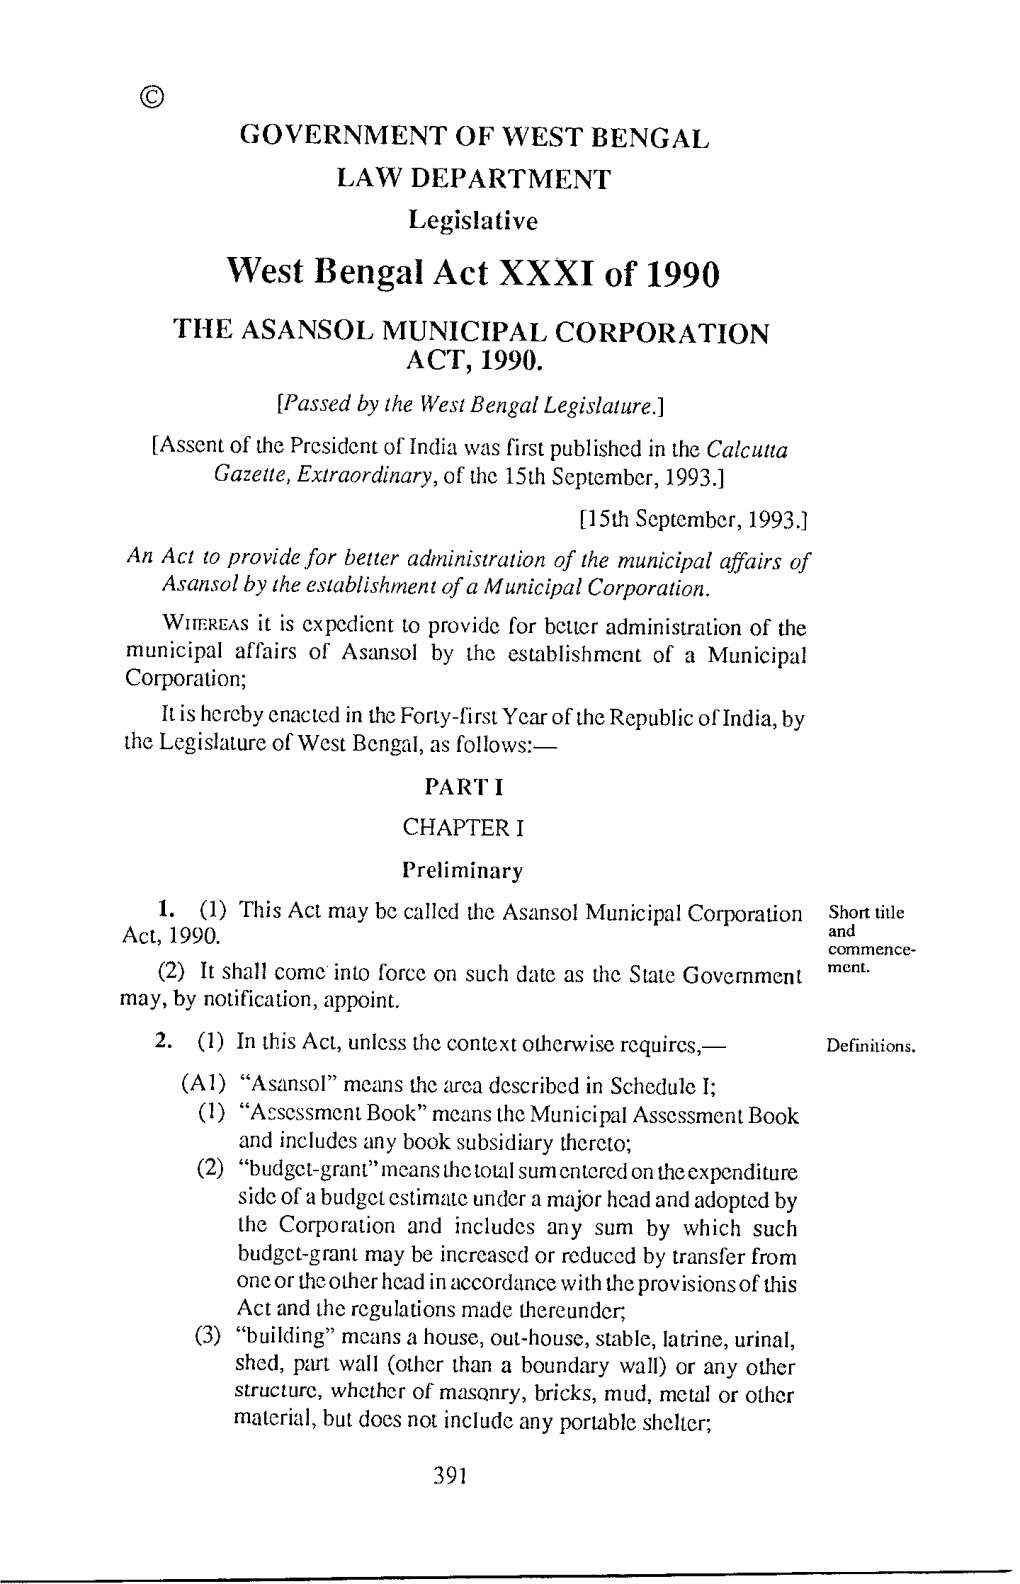 The Asansol Municipal Corporation Act, 1990 (West Bengal Act XXXI Of